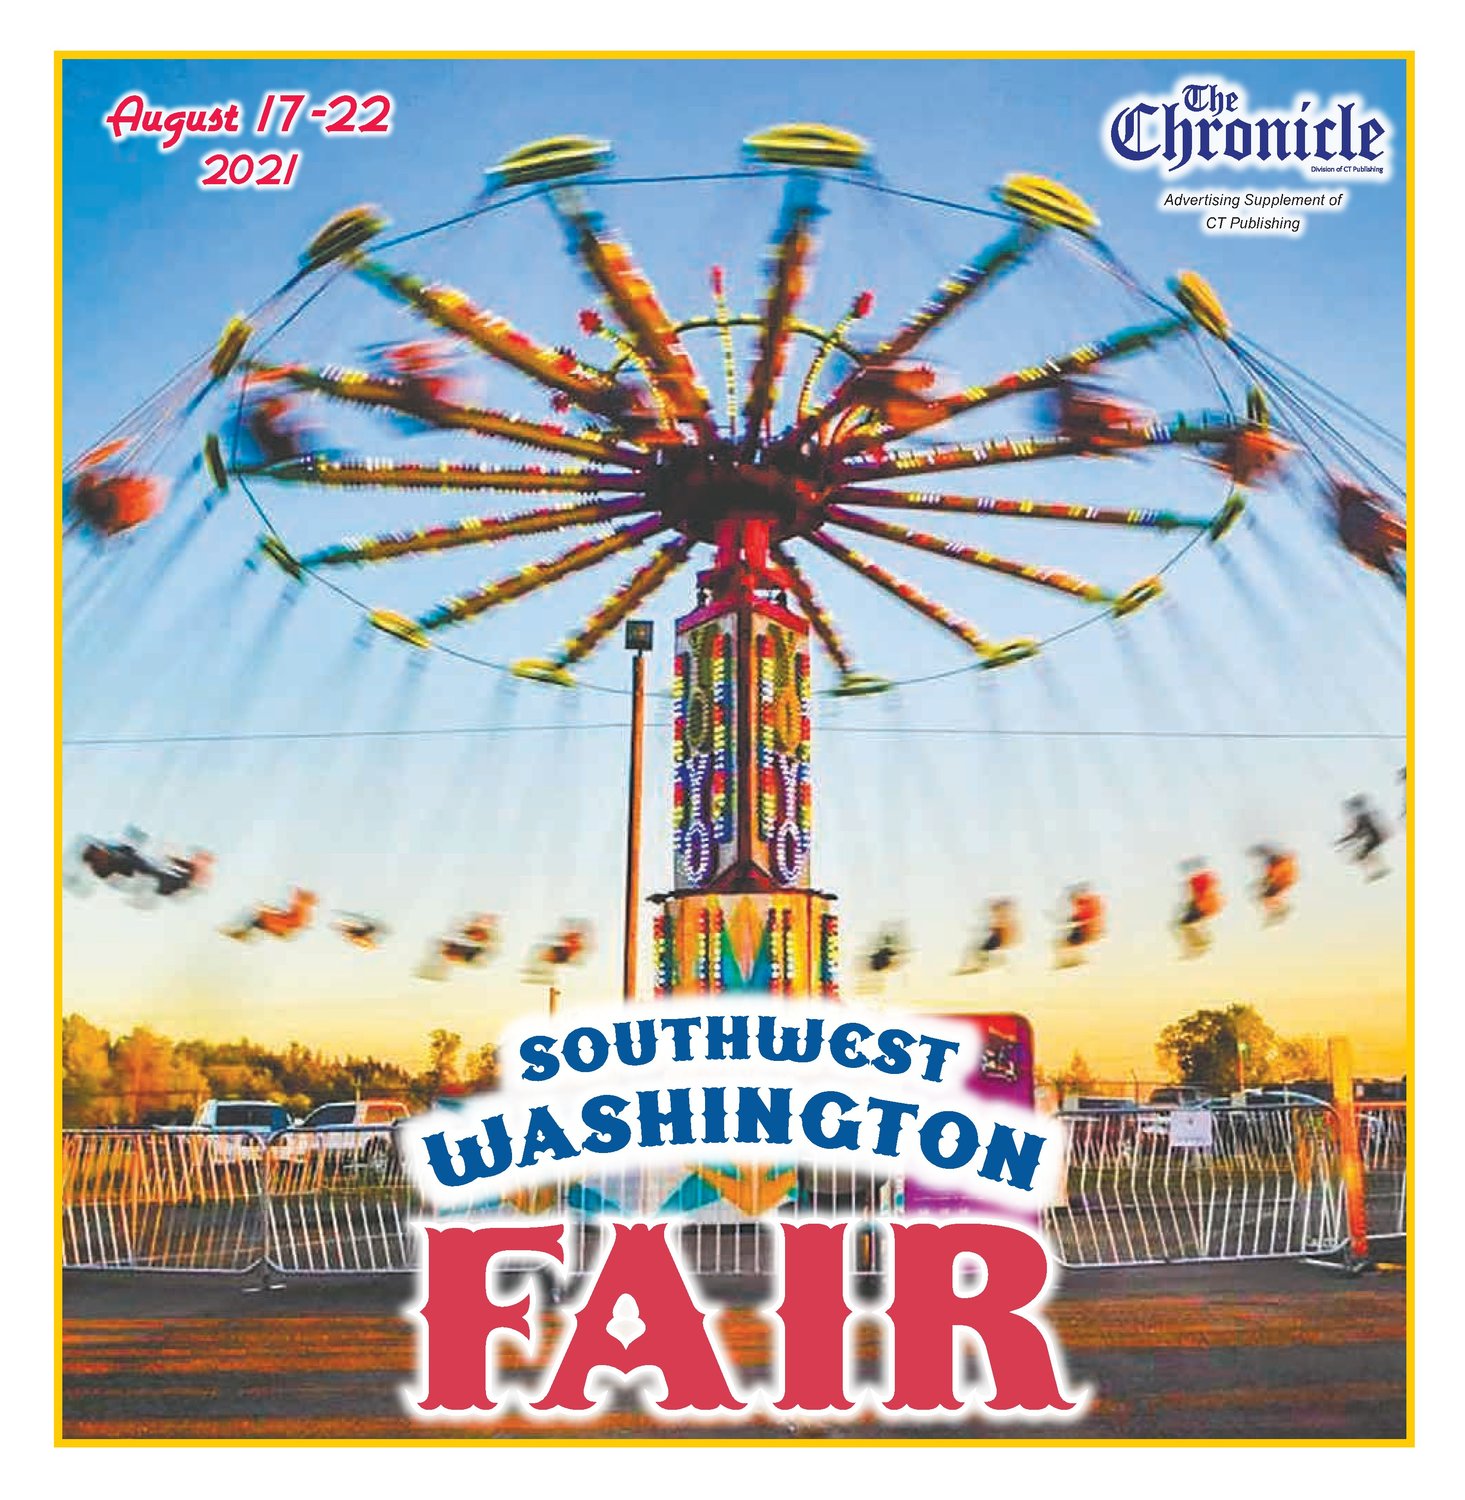 SW Washington Fair Guide The Daily Chronicle